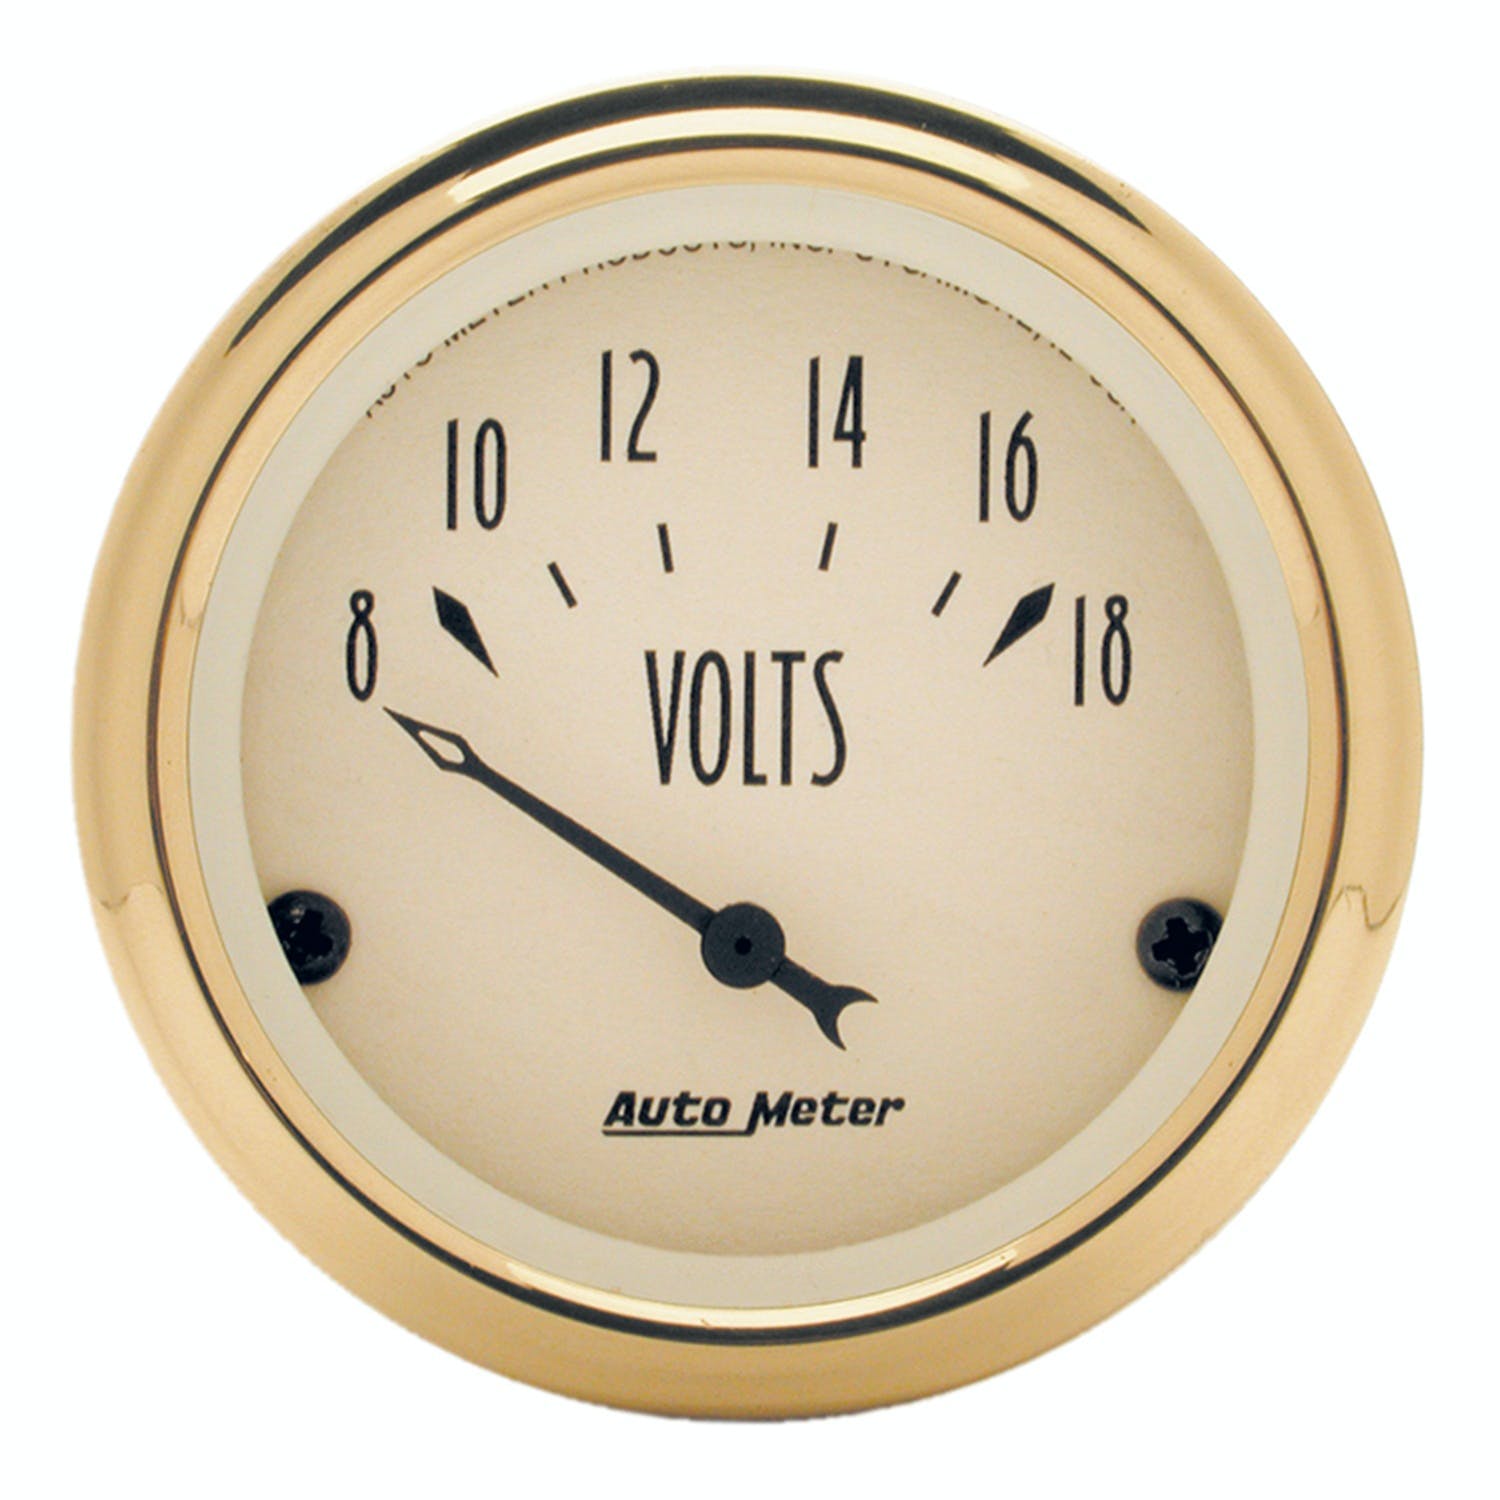 AutoMeter Products 1592 Voltmeter Gauge 8-18 Volts